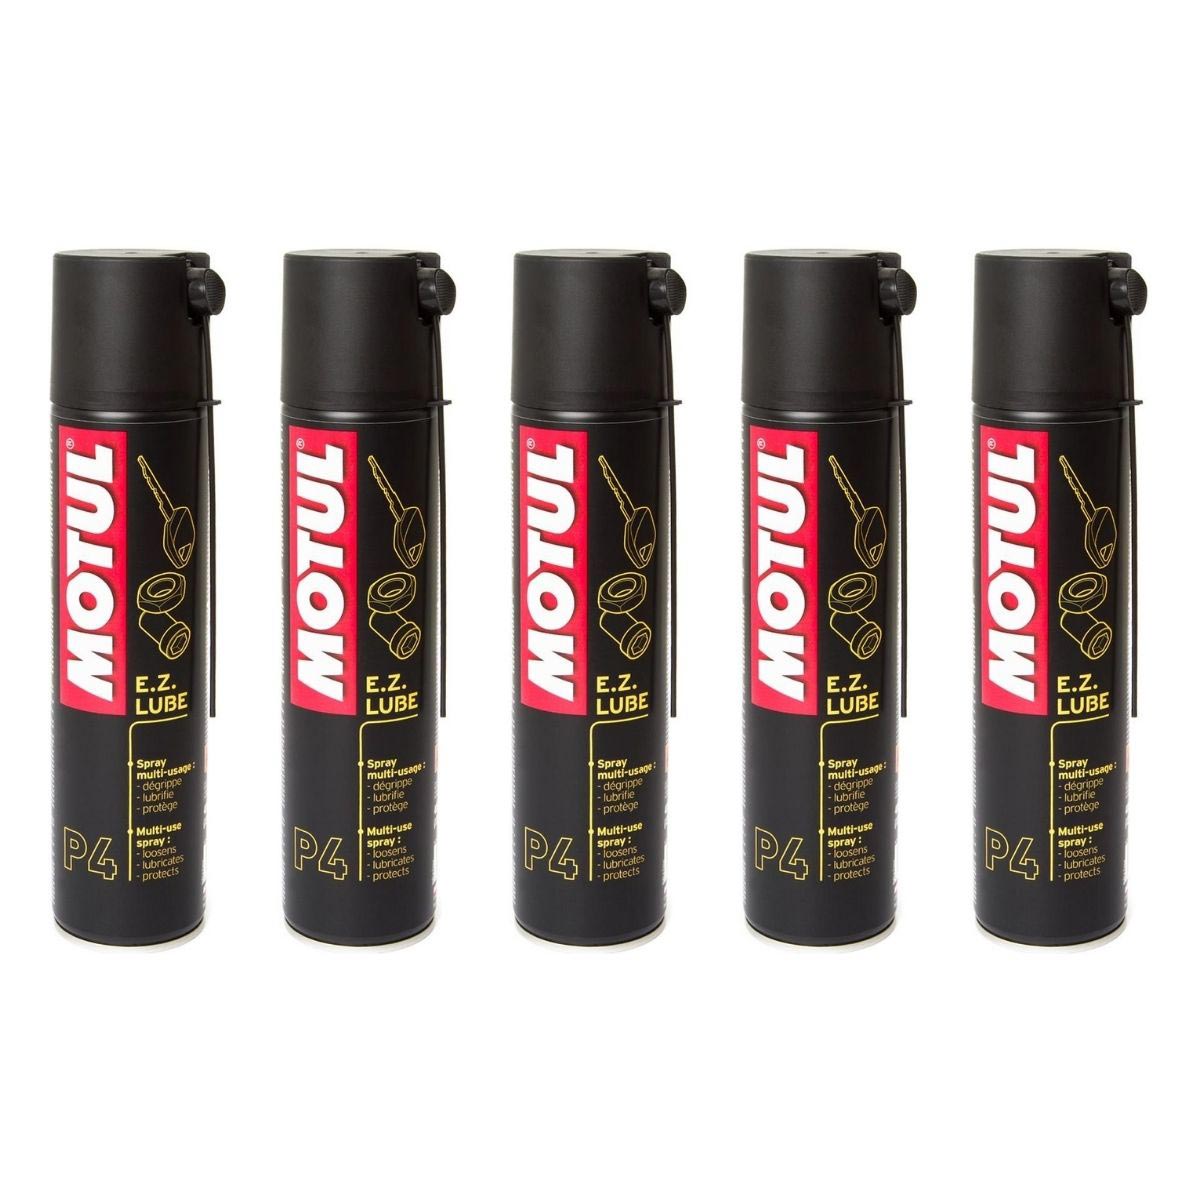 Motul Spray Multiuso P4 E.Z. Lube Set: 5 pezzi, 400 ml ciascuno